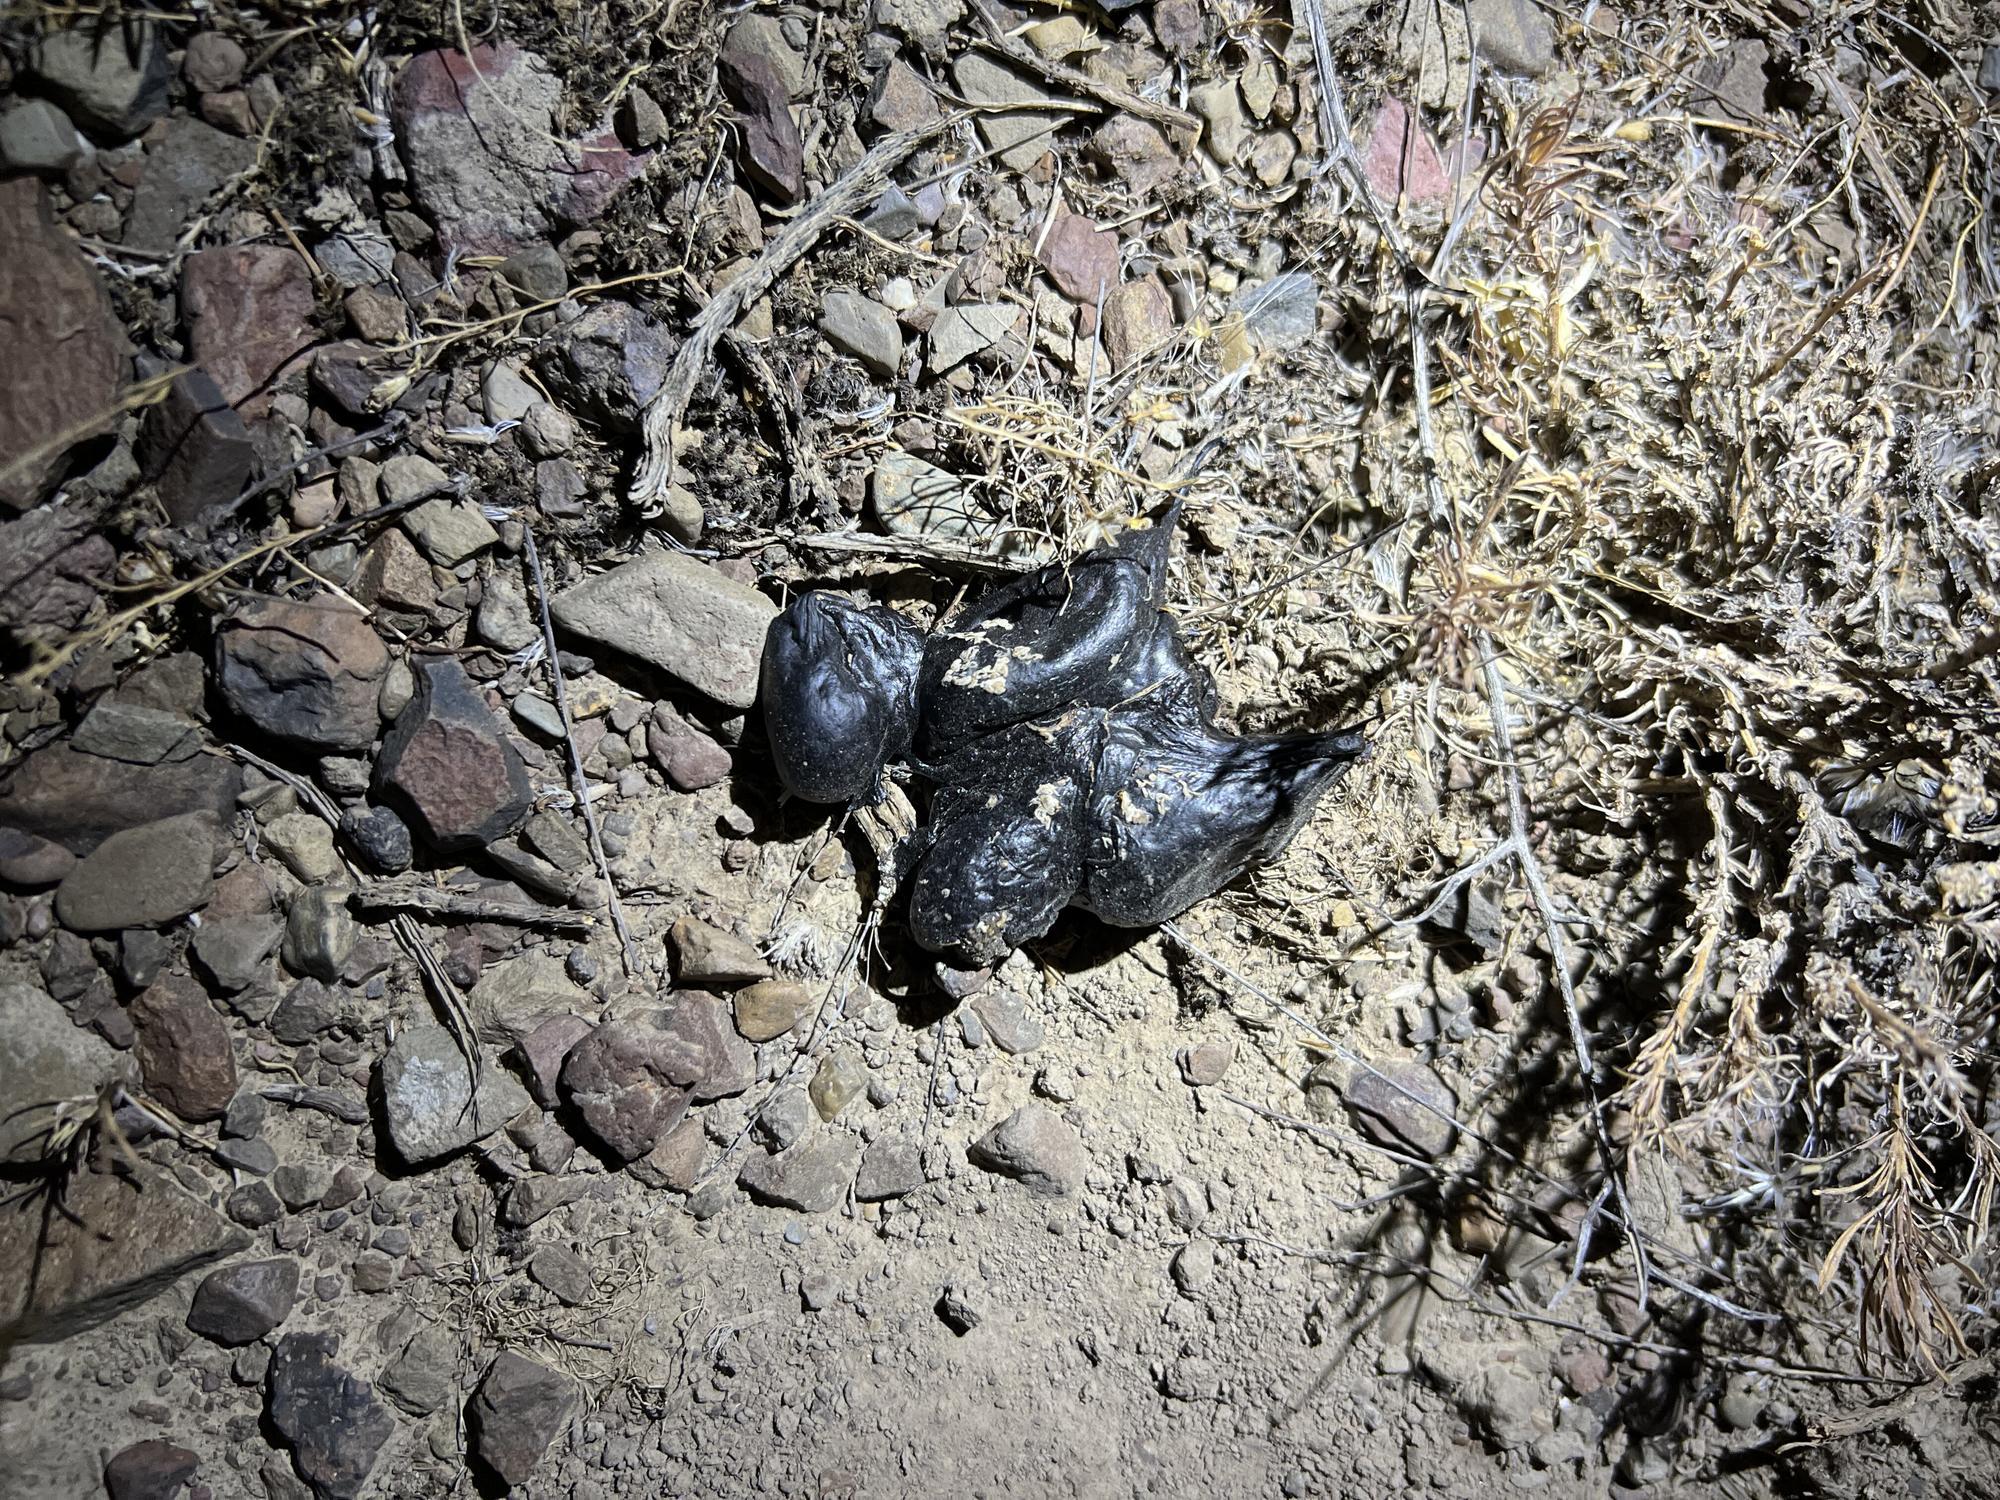 black tar-like glob on a rock